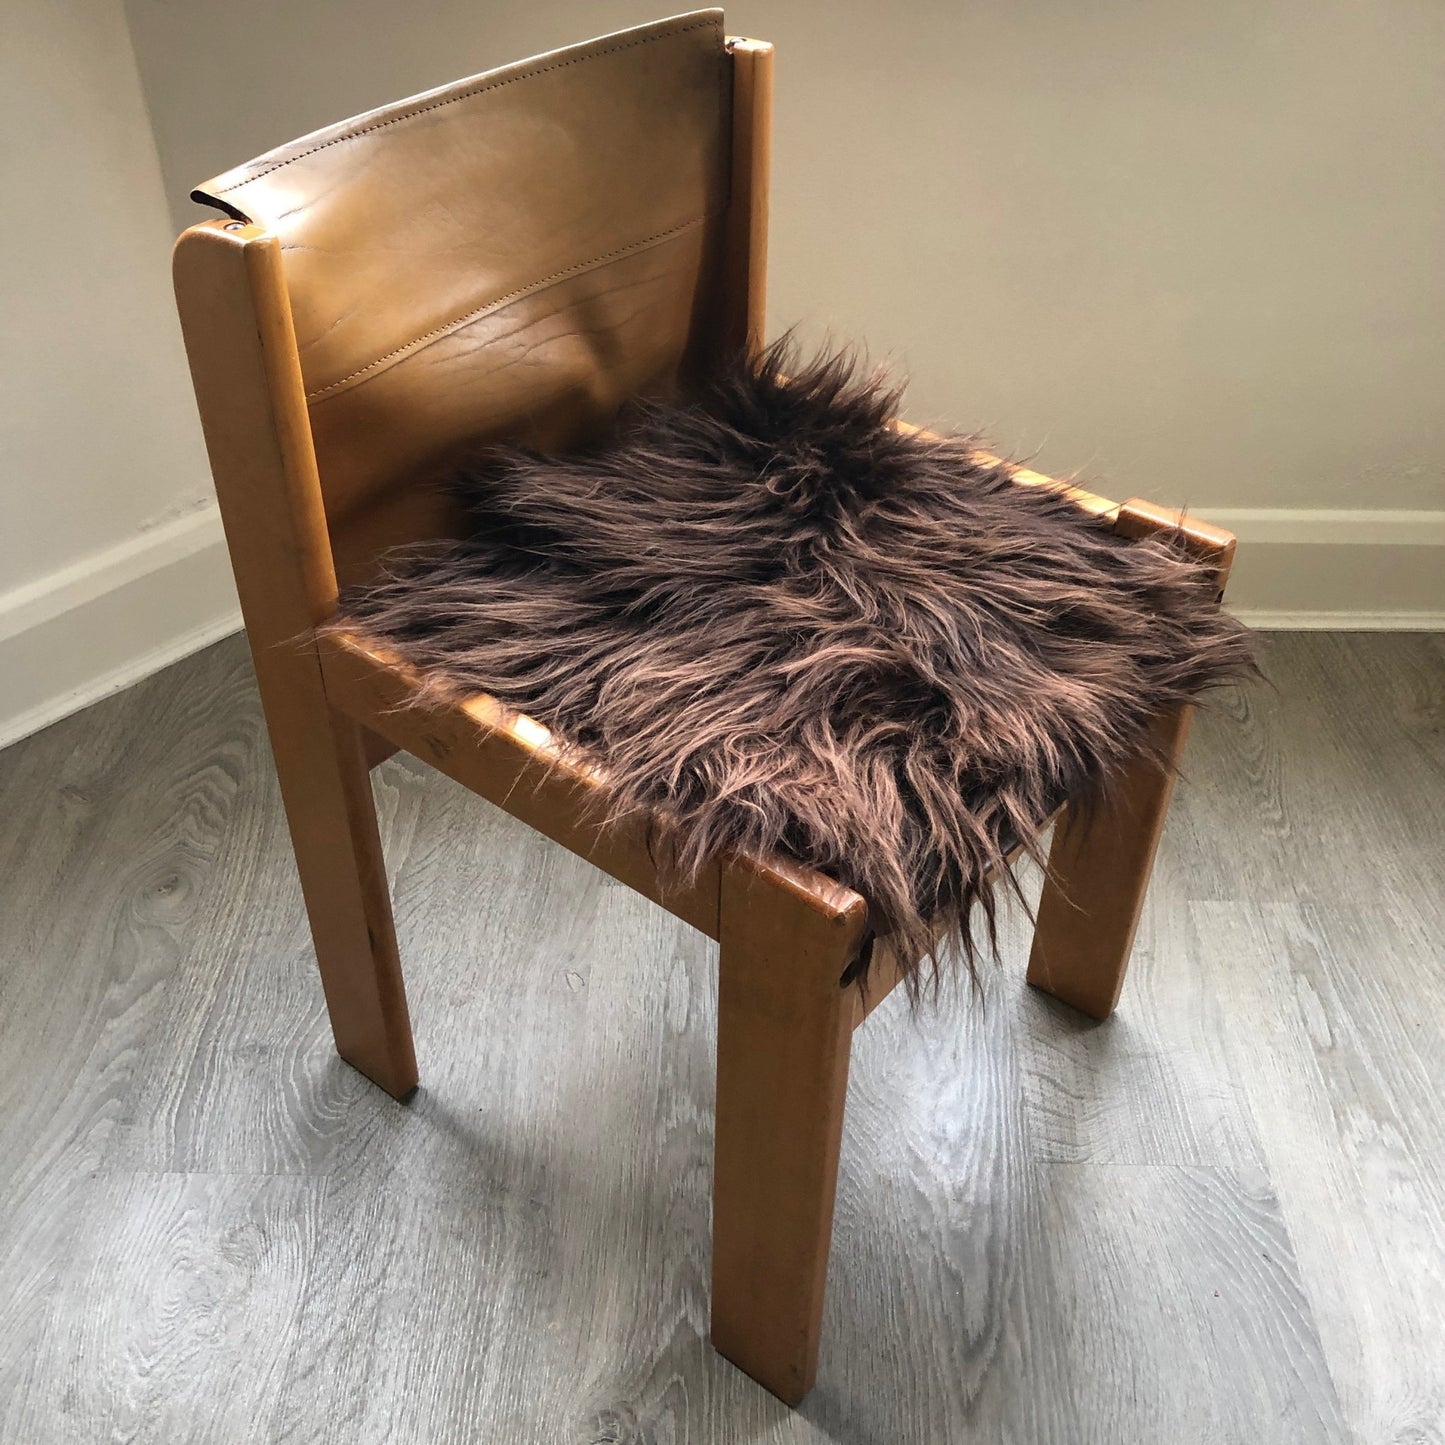 Icelandic Sheepskin Square Seat Cover 37cm Chestnut Brown - Wildash London